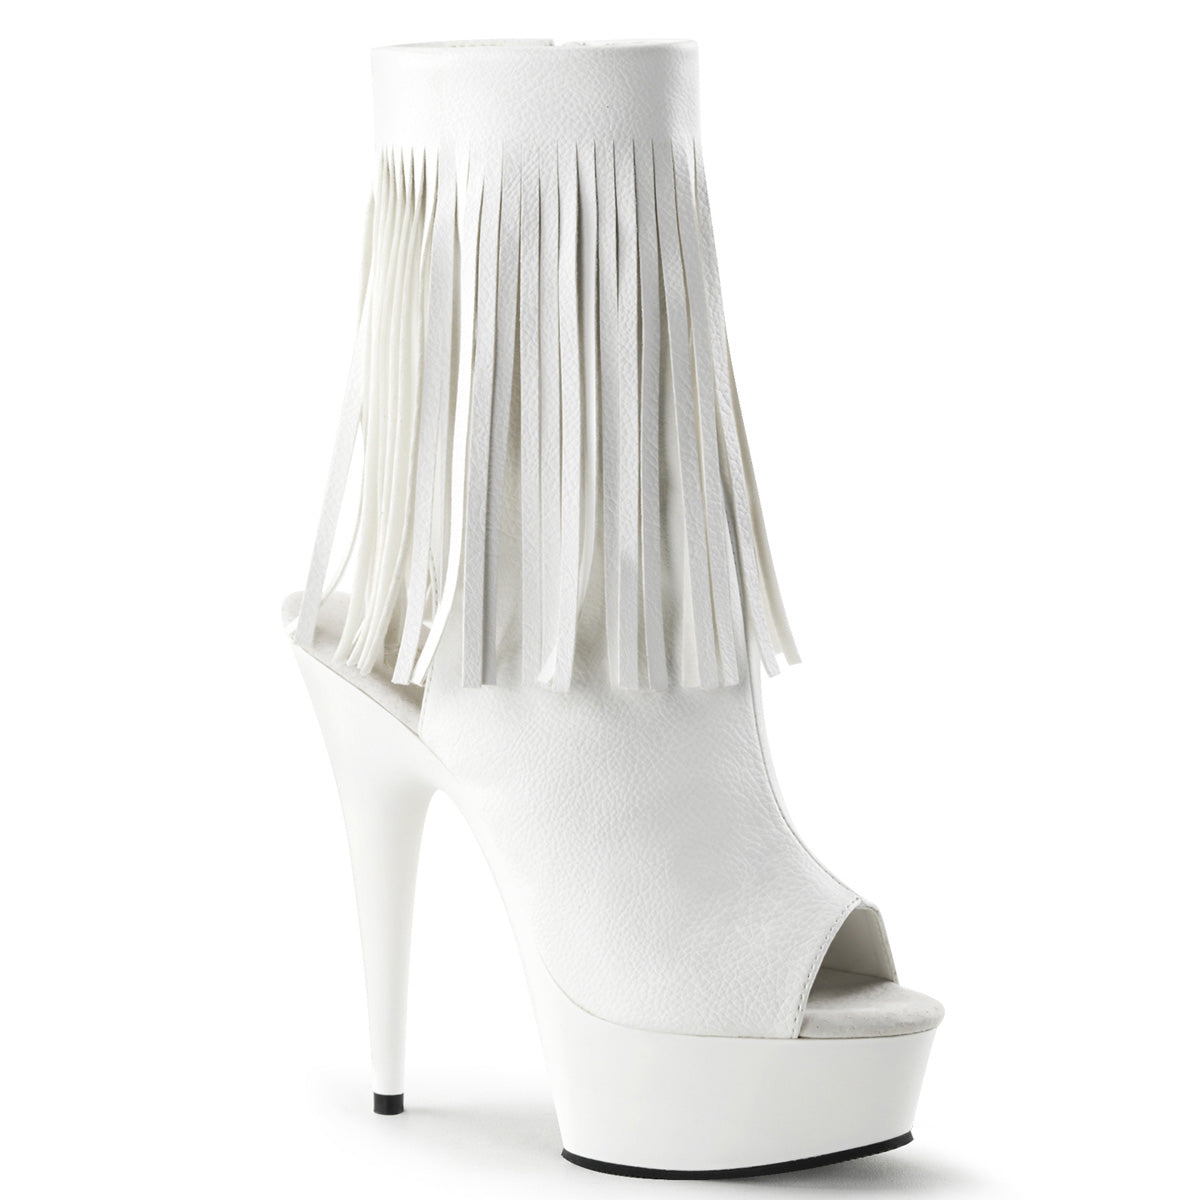 DELIGHT-1019 Pleaser 6 Inch Heel White Pole Dancer Platforms-Pleaser- Sexy Shoes